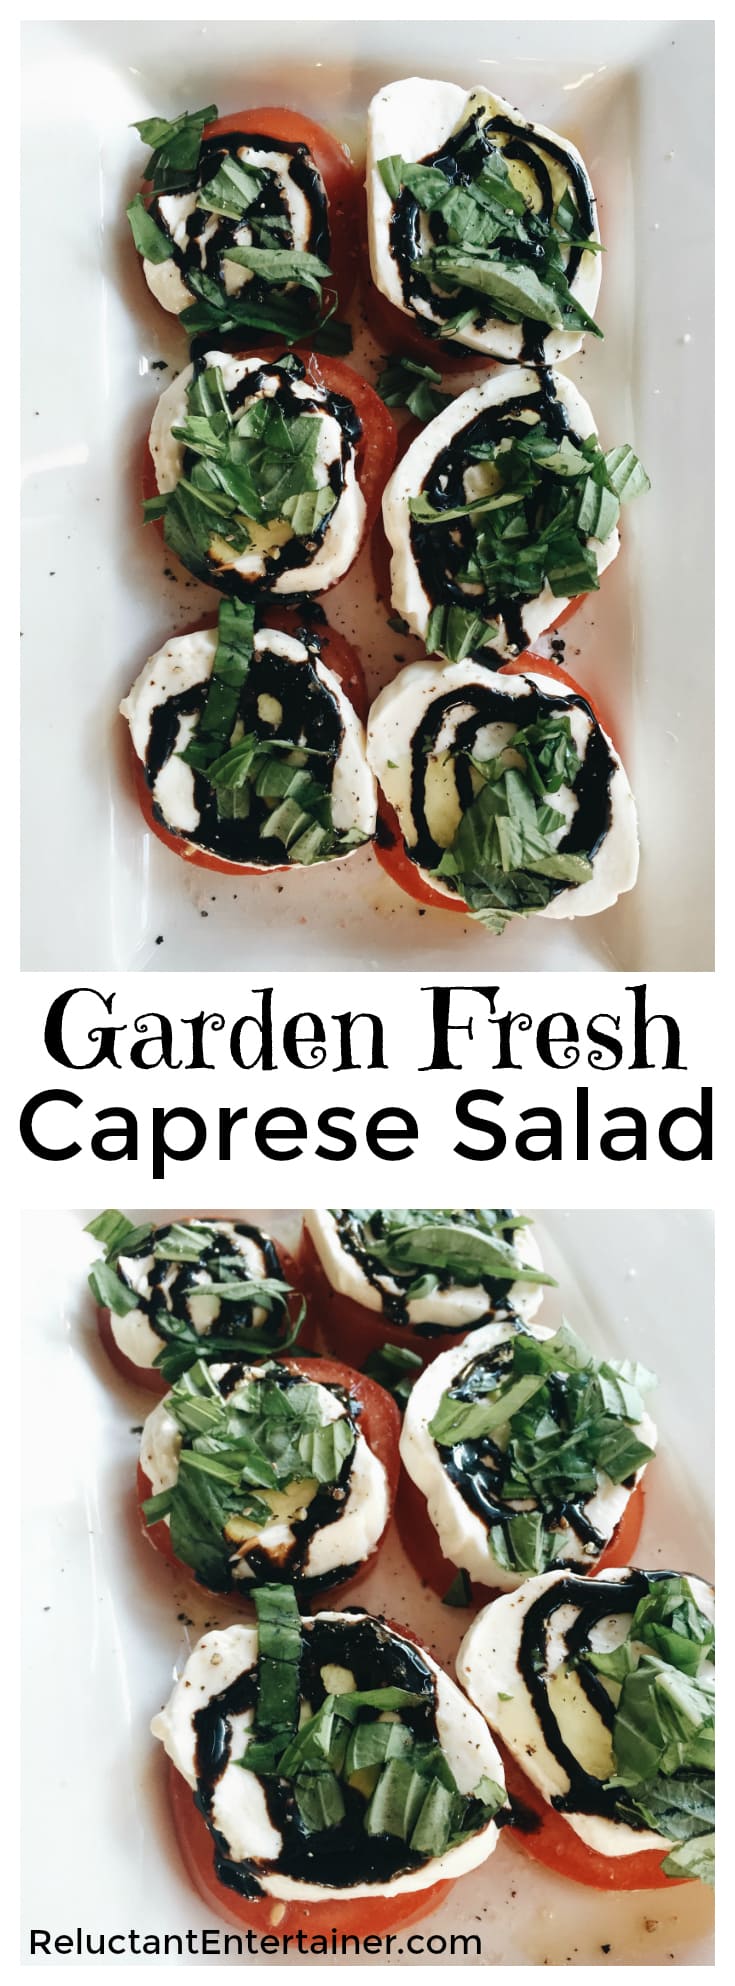 Garden Fresh Caprese Salad